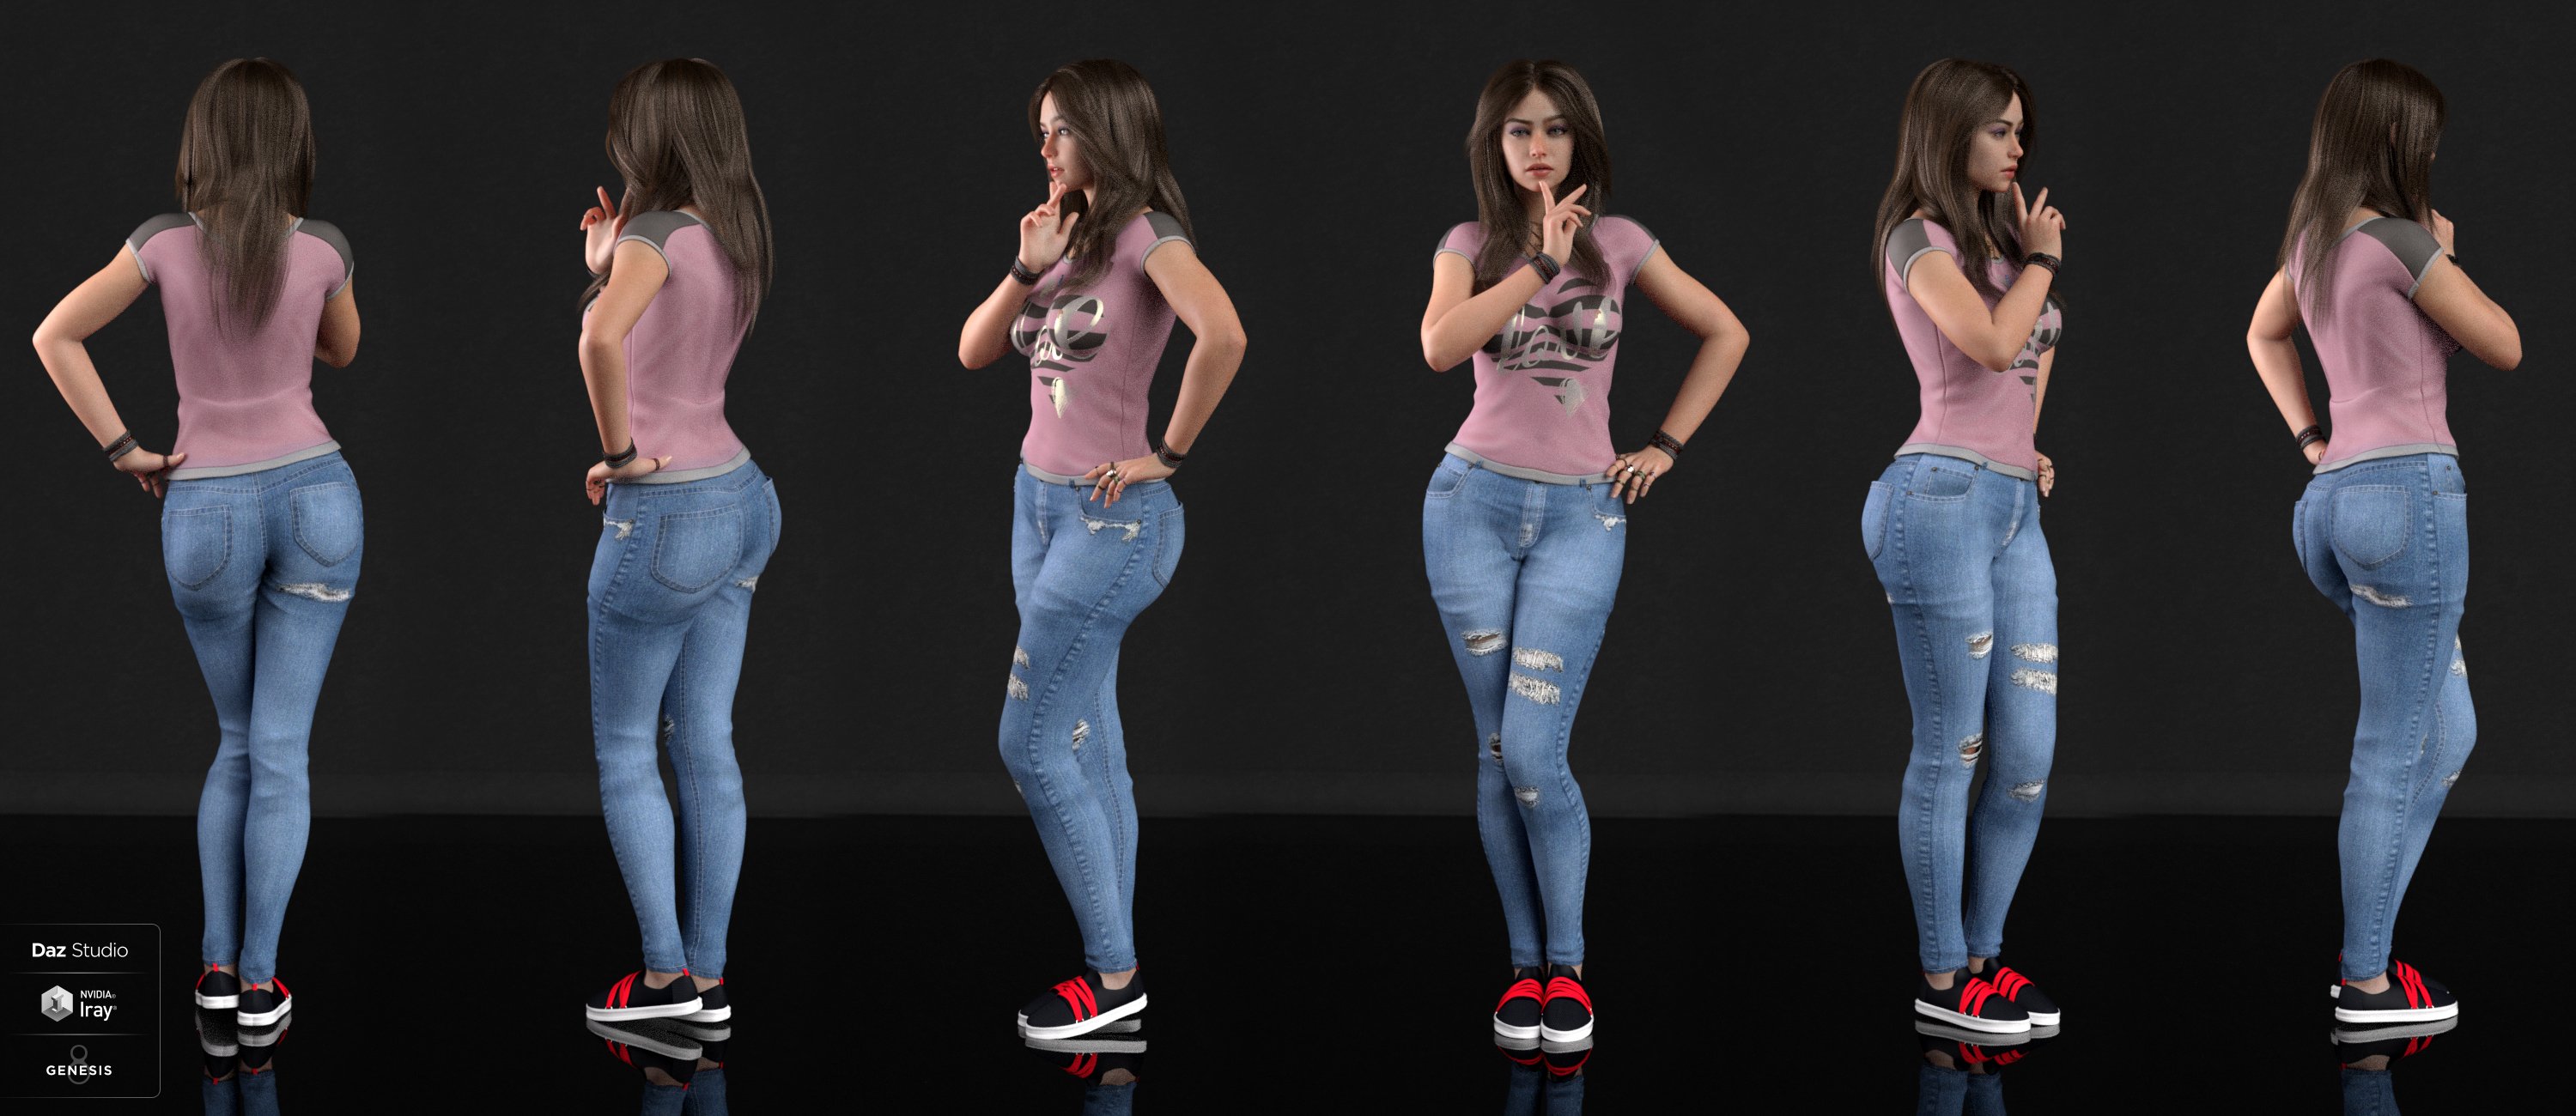 Lovisa HD For Genesis 8 Female by: iSourceTextures, 3D Models by Daz 3D